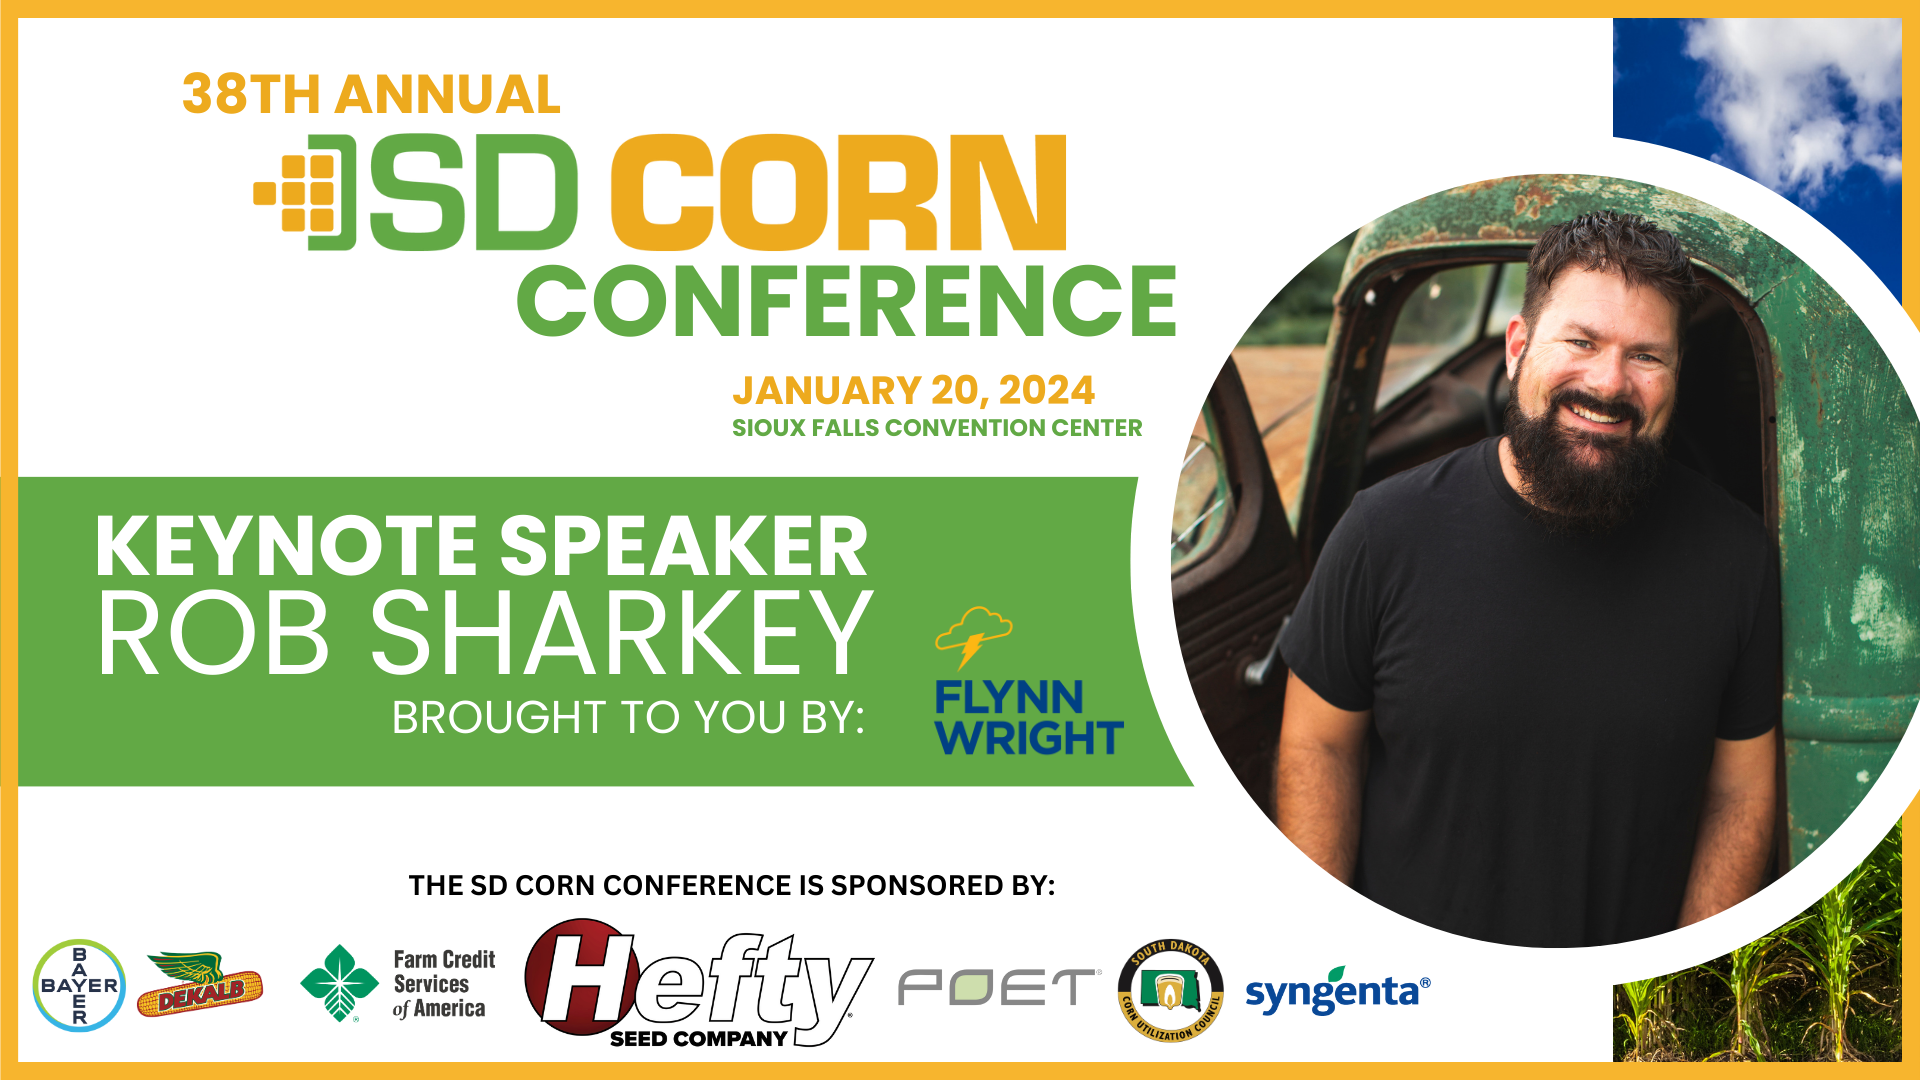 Corn Conference